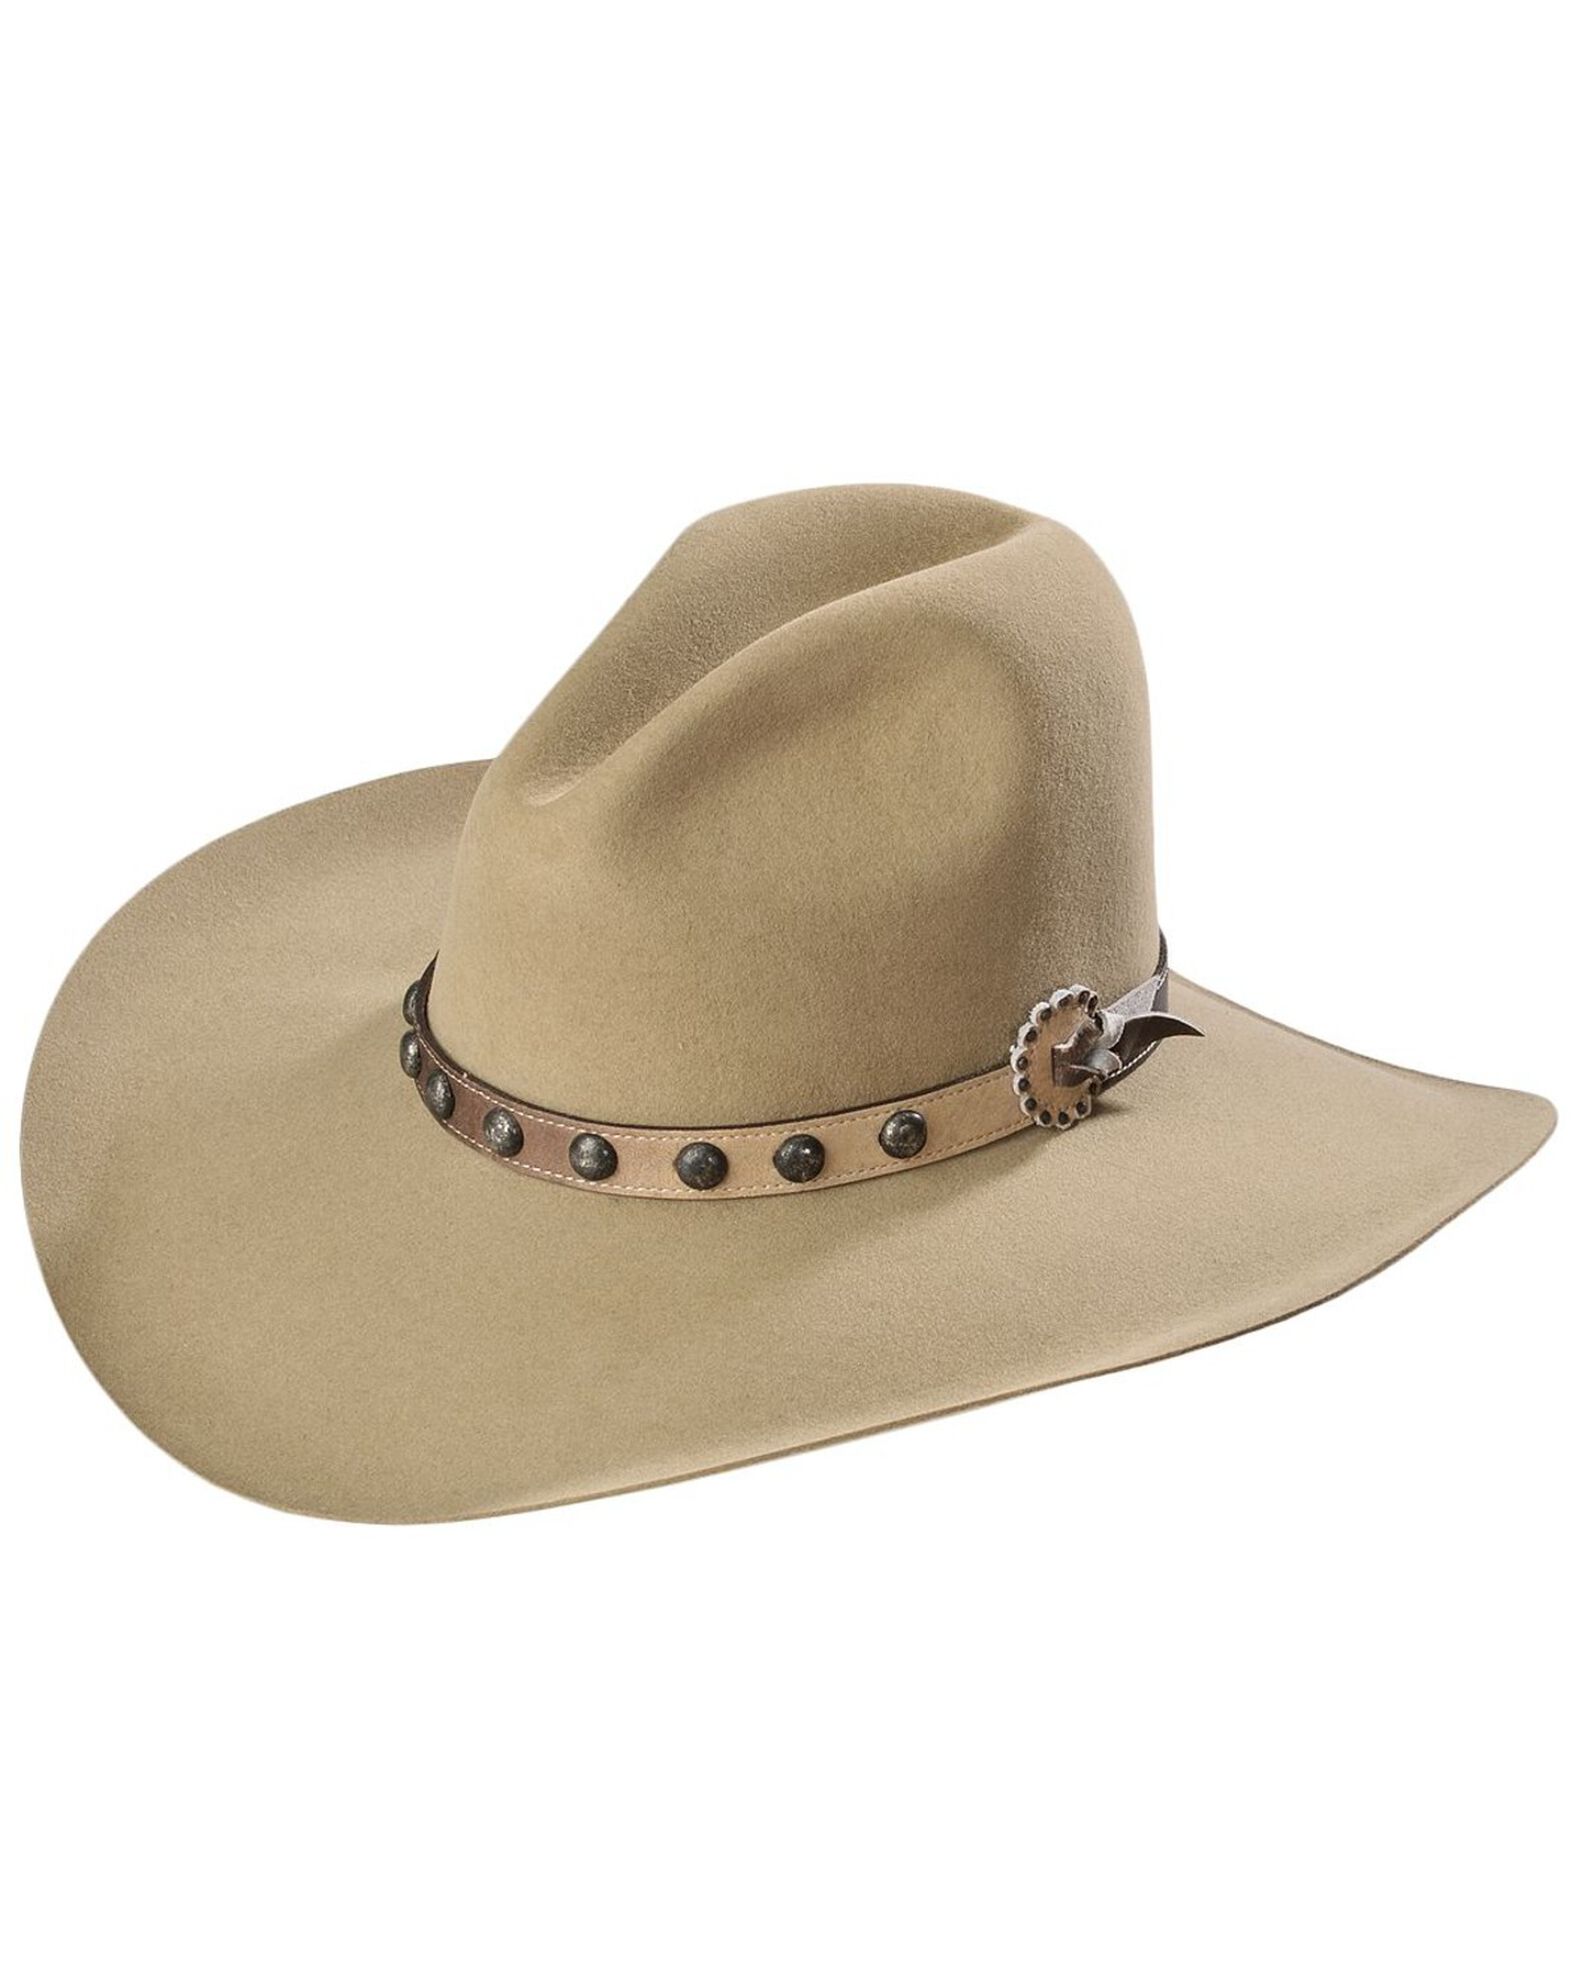 Beistle Tan Felt Cowboy Hat (6 Per Case)